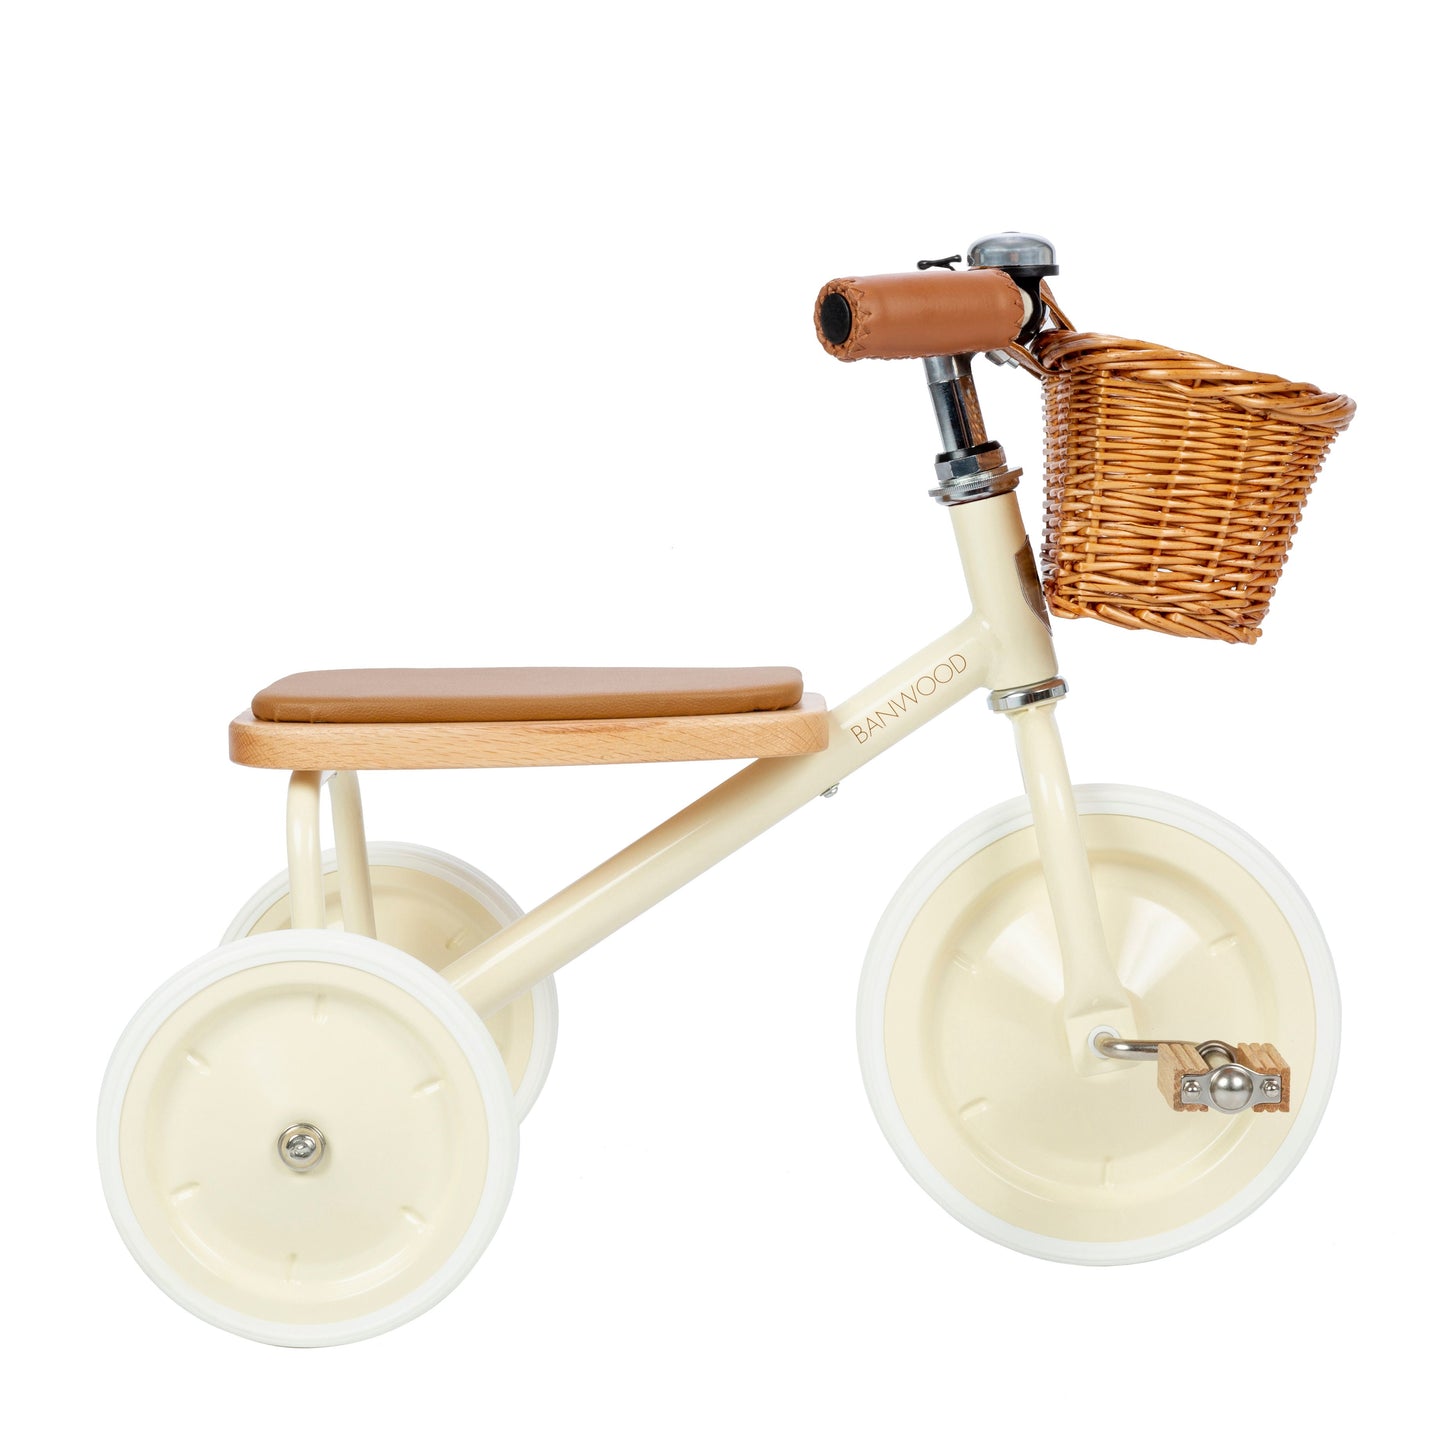 Banwood Bikes - Trike - Cream